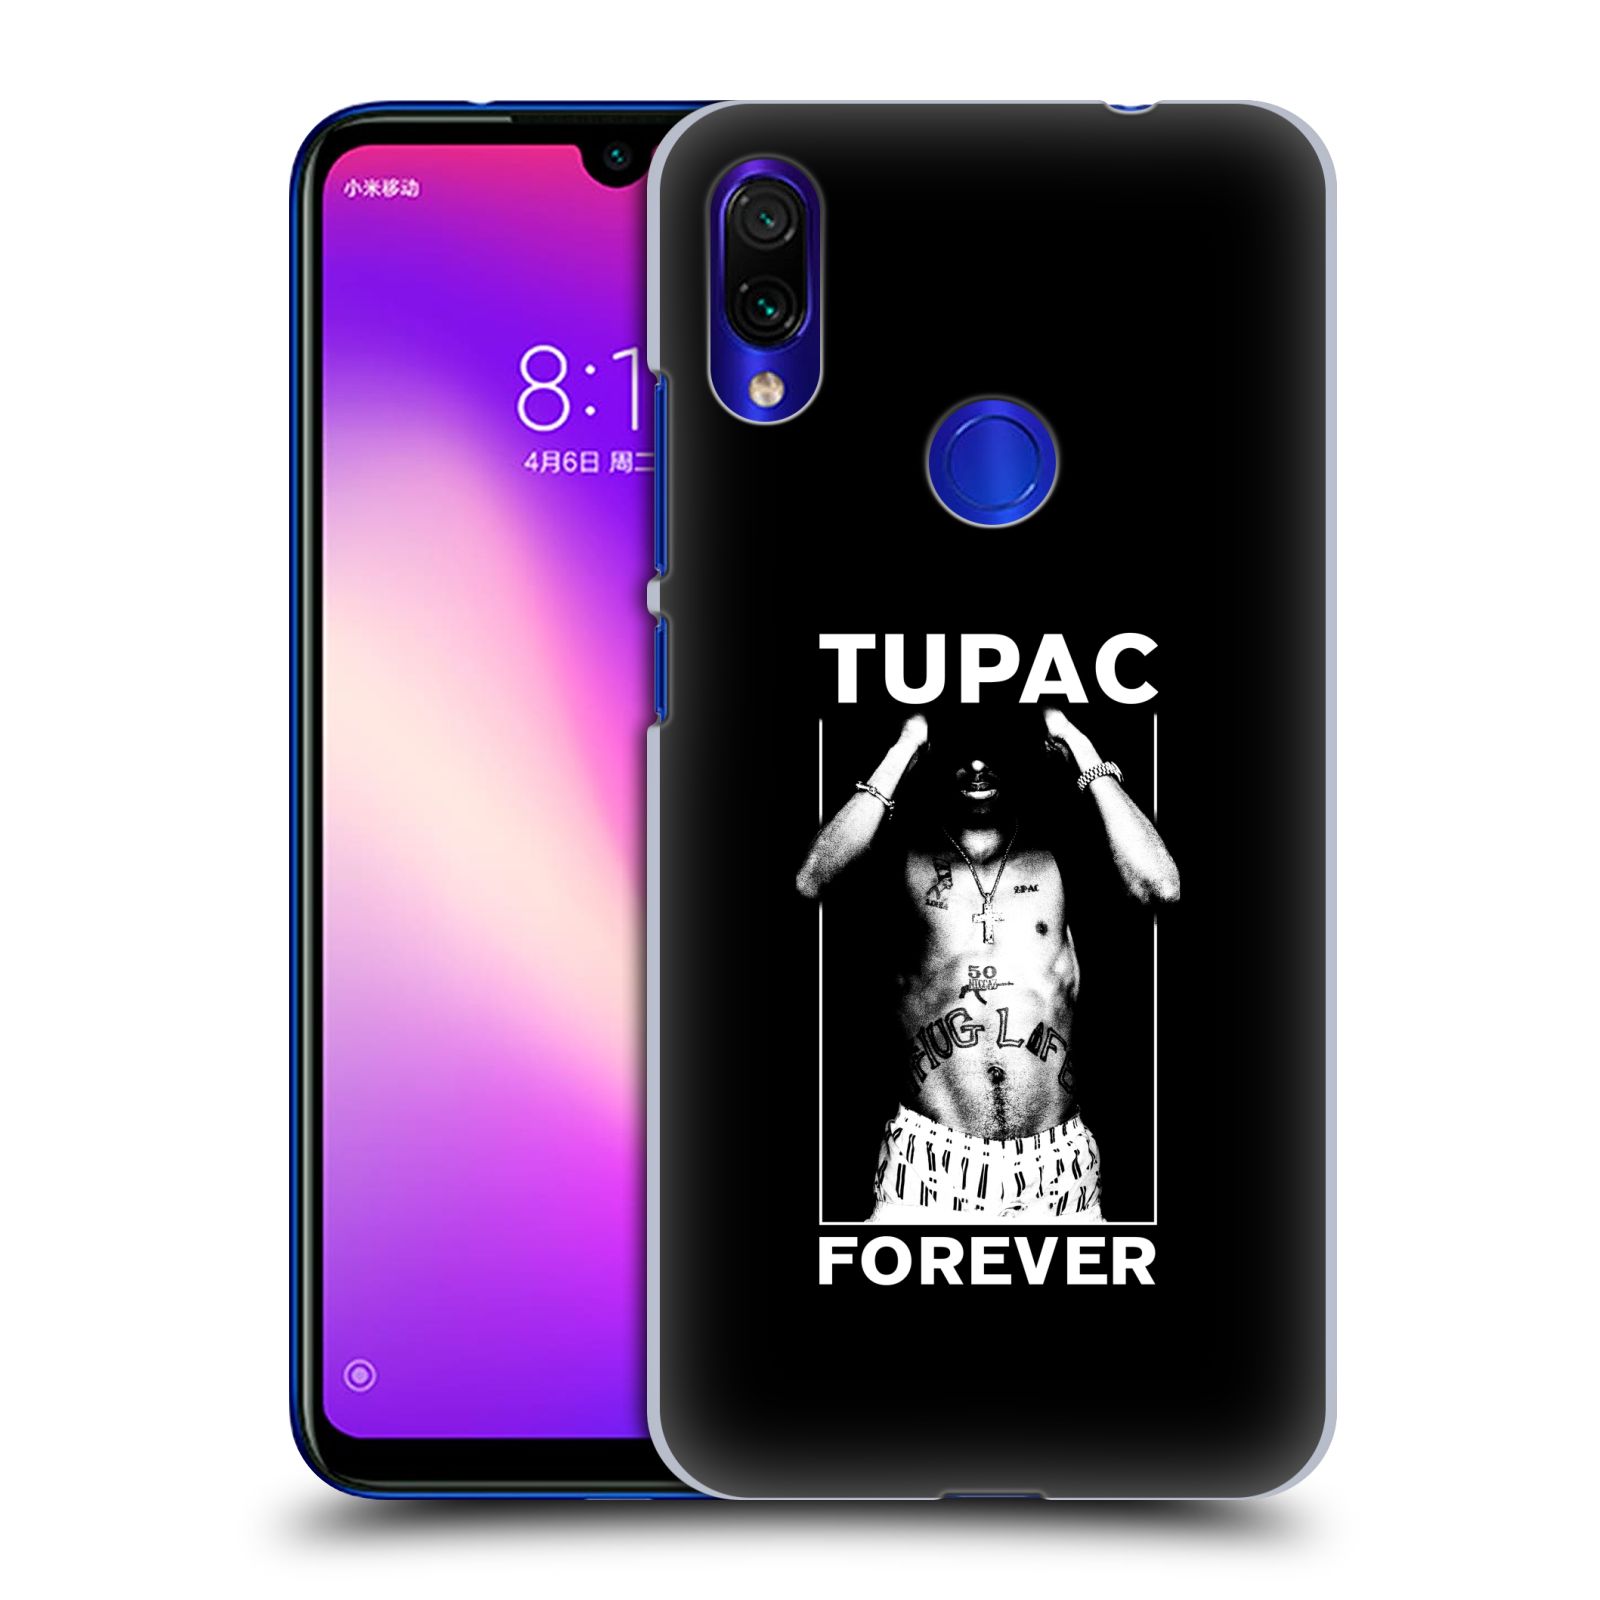 Pouzdro na mobil Xiaomi Redmi Note 7 - Head Case - Zpěvák rapper Tupac Shakur 2Pac bílý popisek FOREVER